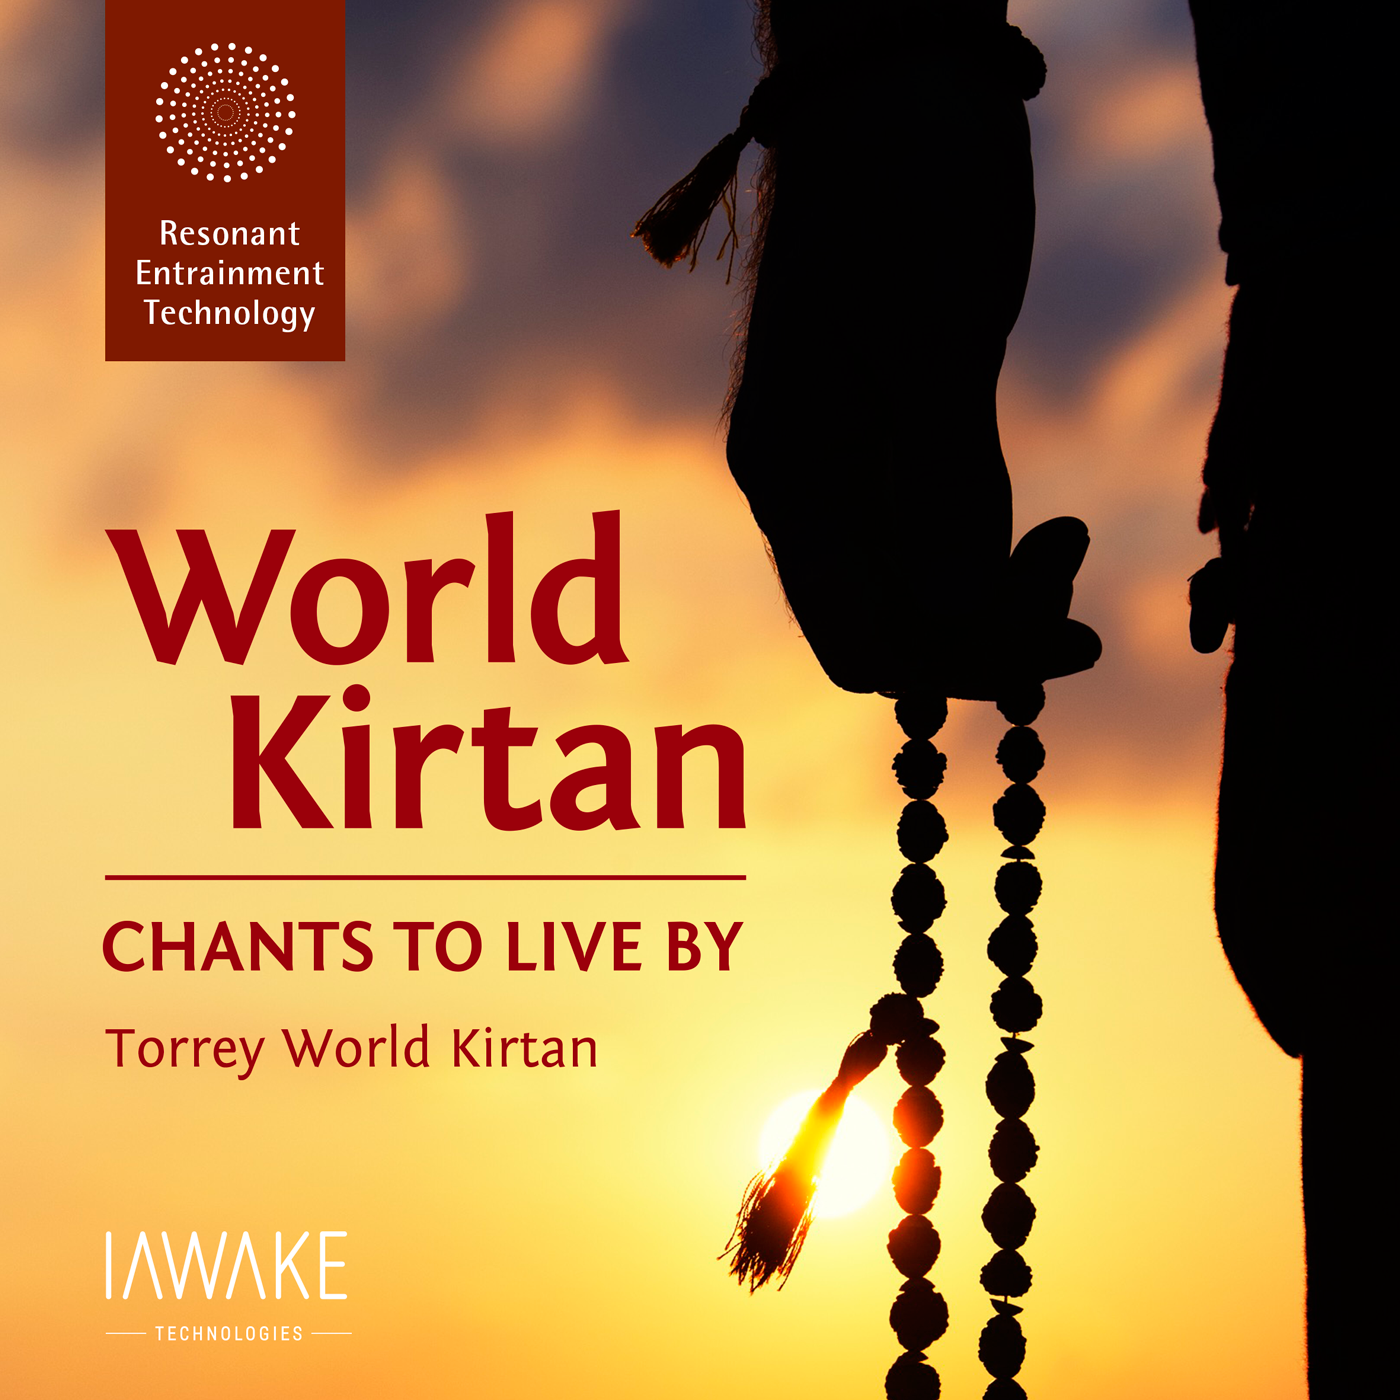 World Kirtan (Chants to Live By) - iAwake Technologies